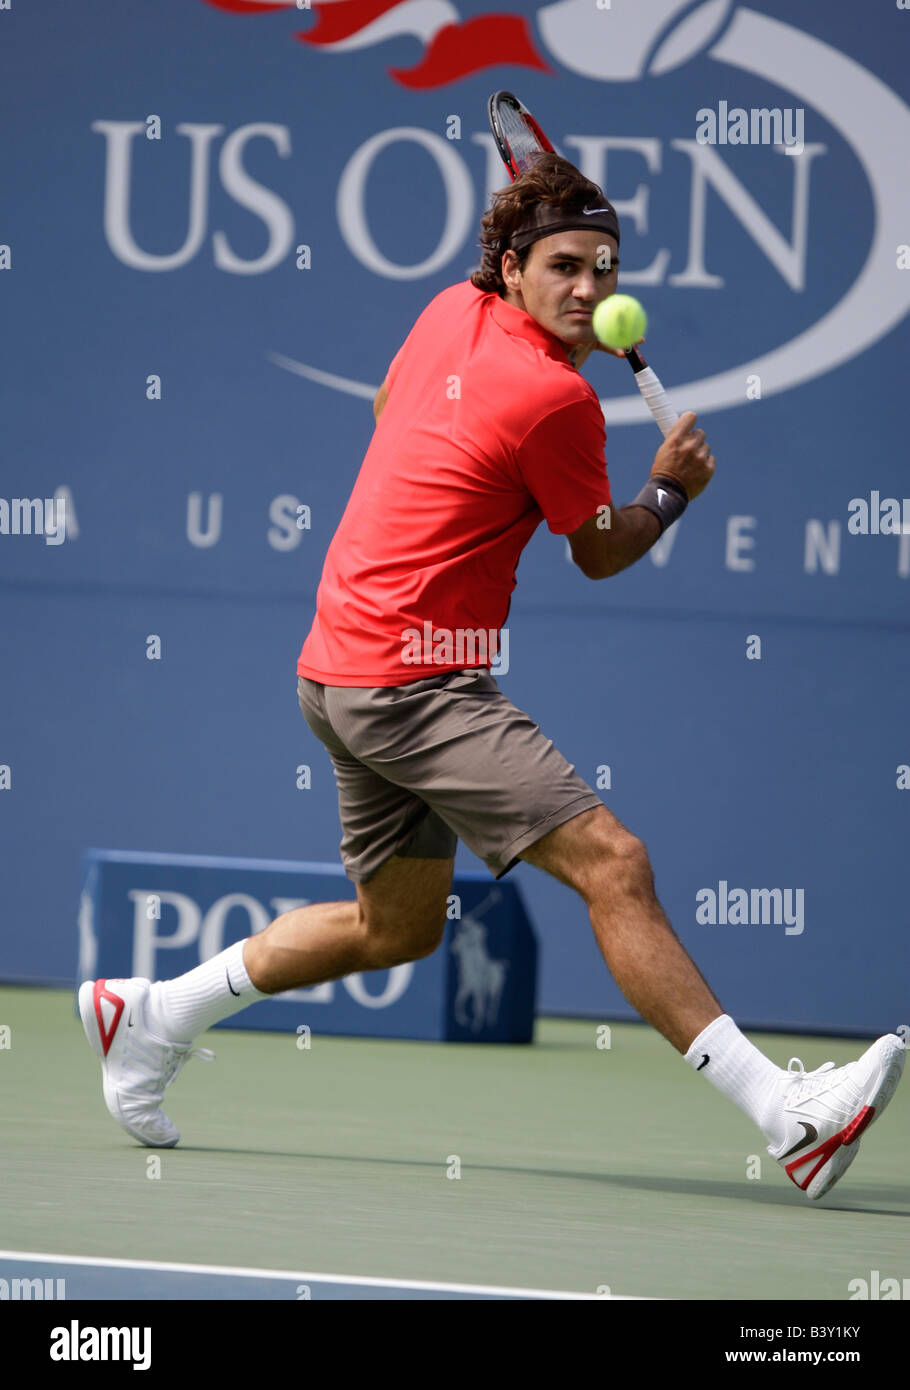 Roger Federer (SUI) in Aktion bei den US Open. Stockfoto